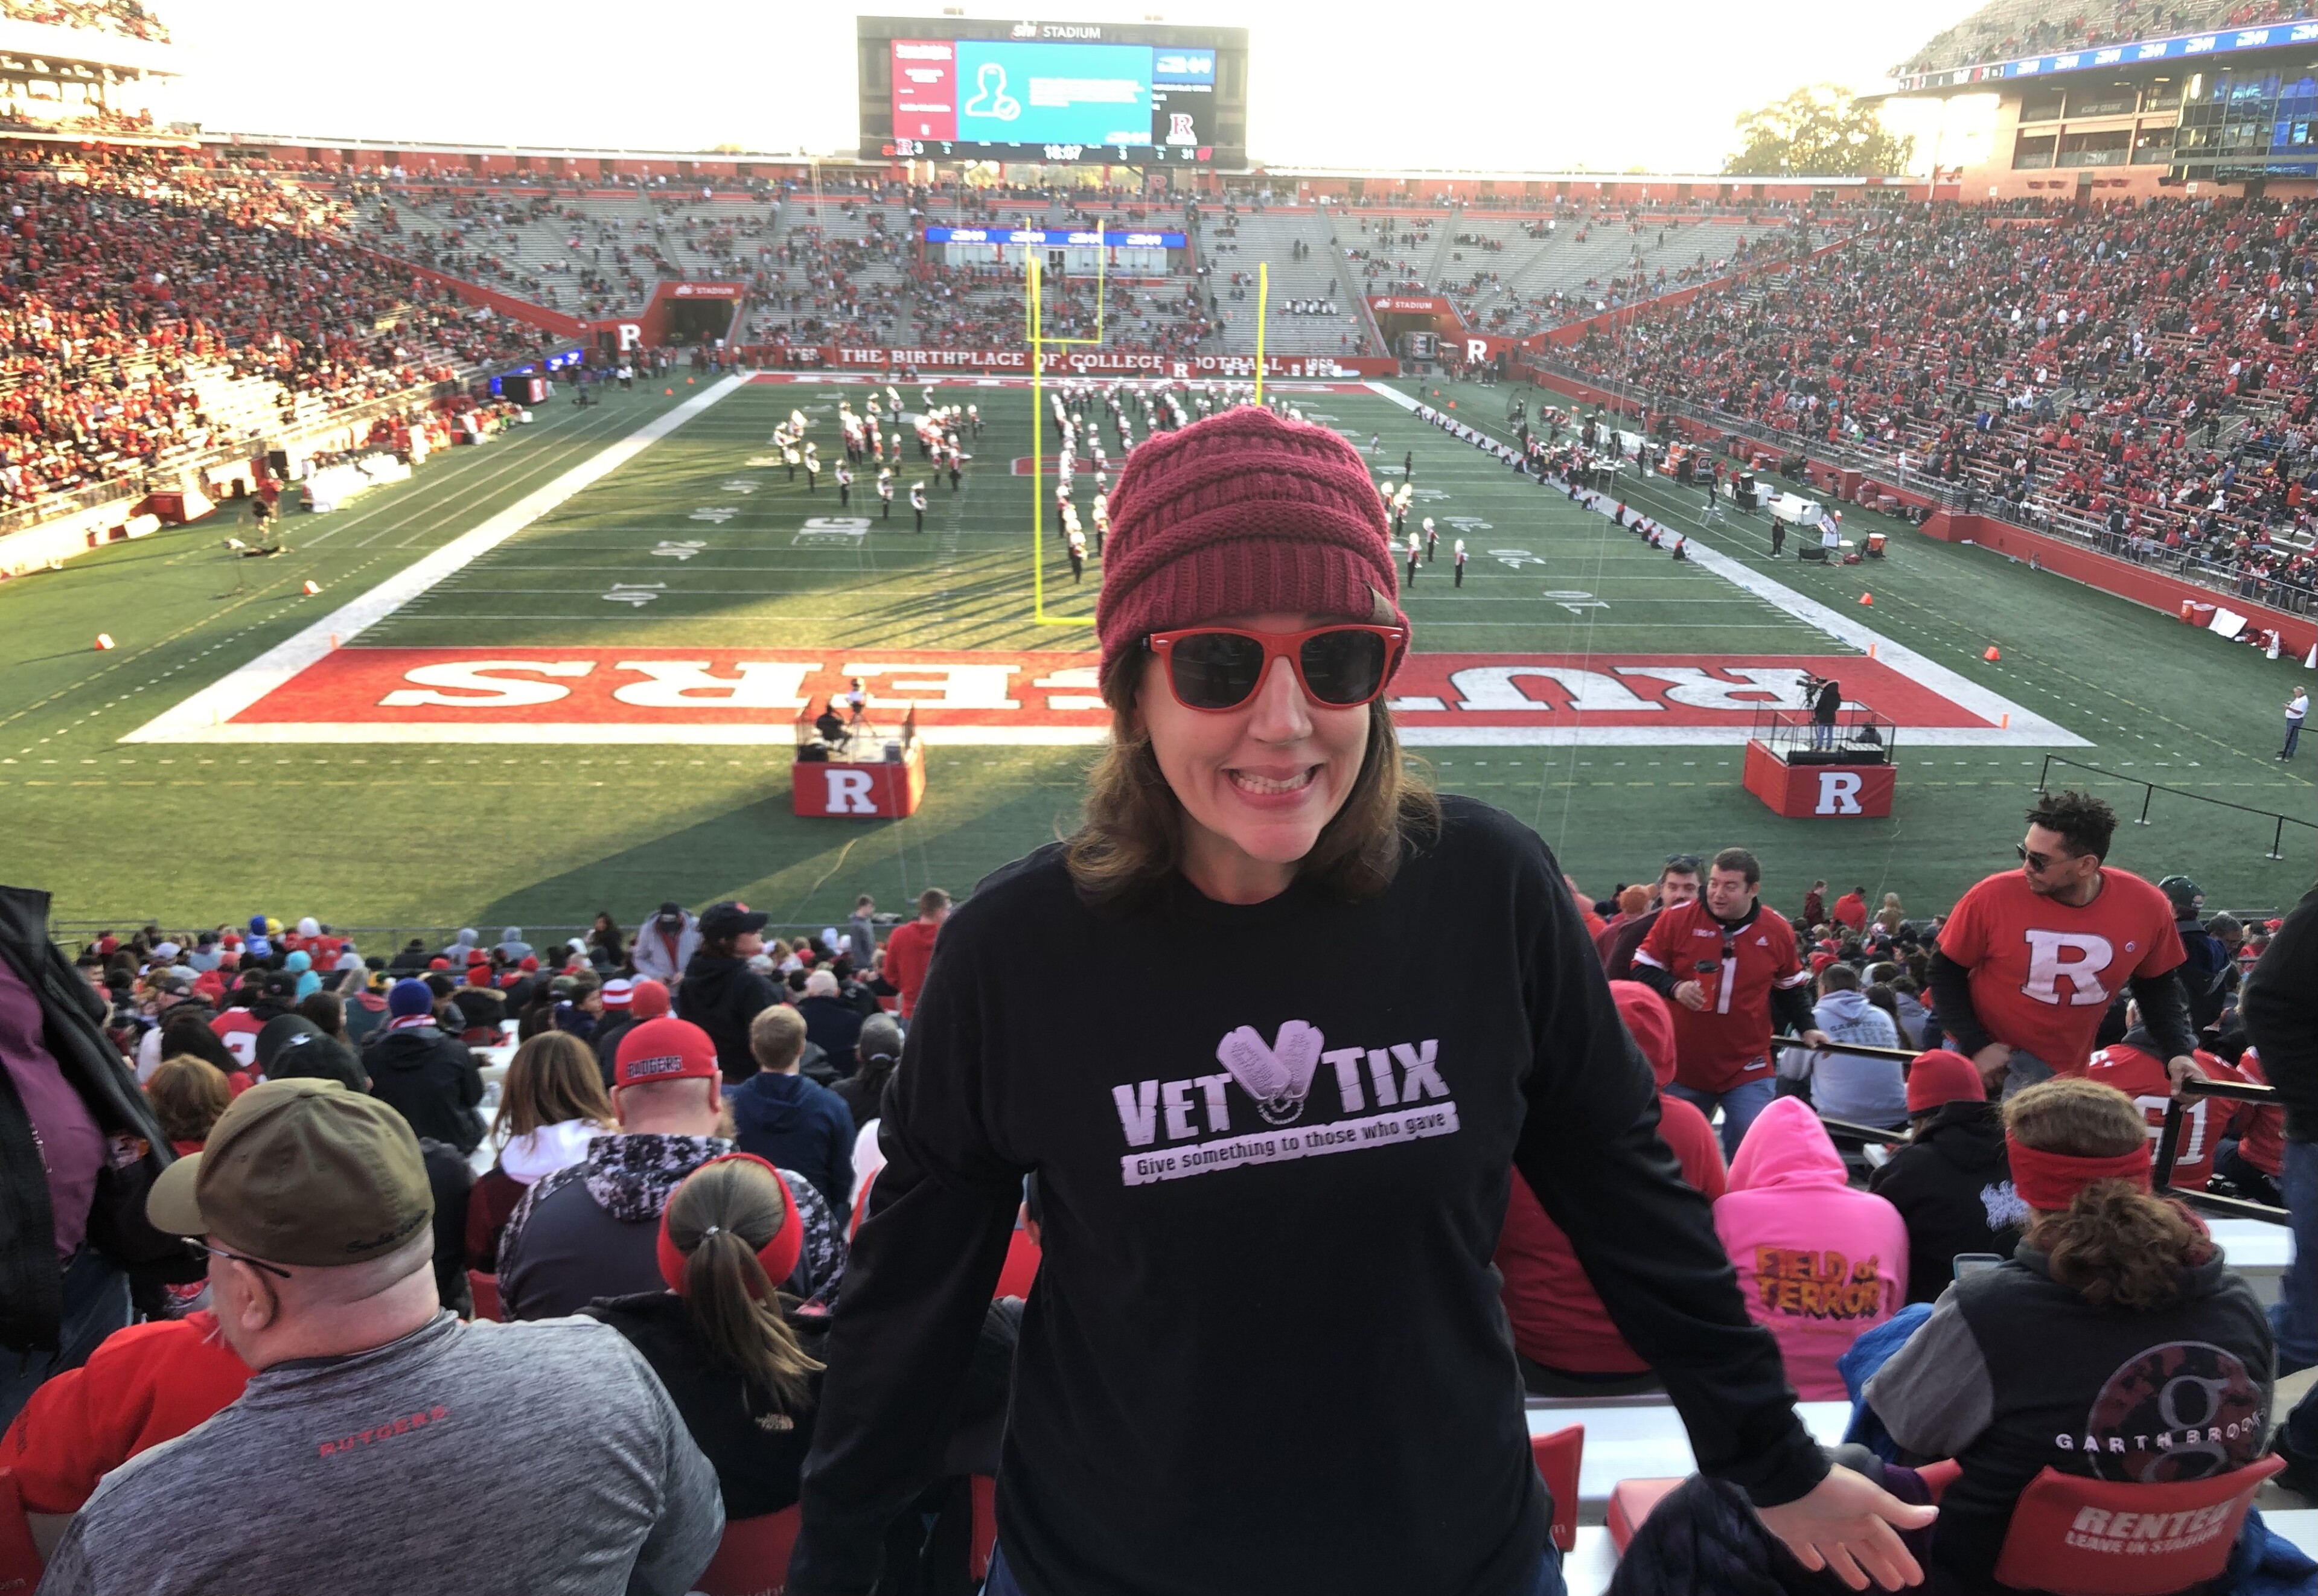 Rutgers Scarlett Knights vs. Wisconsin - NCAA Football